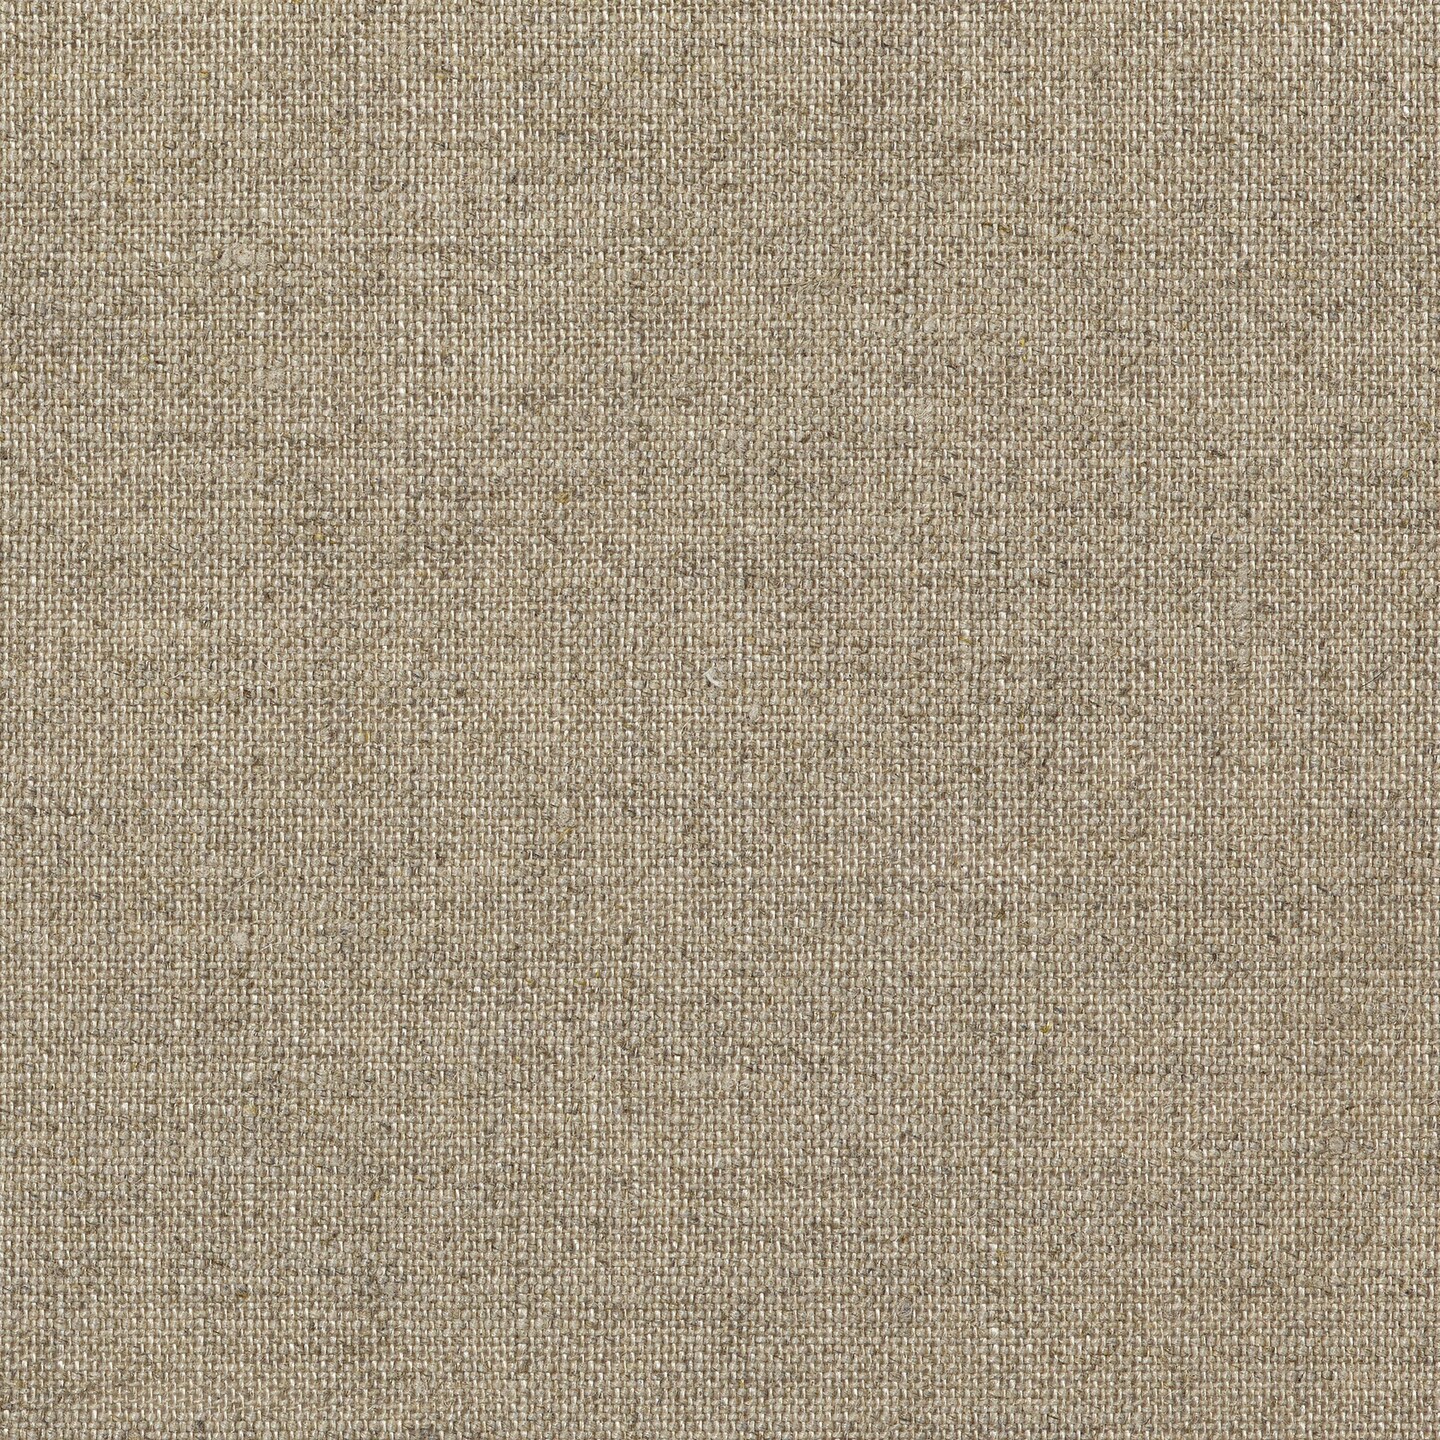 Claessens Unprimed Linen Canvas Roll - No.013, 82&#x22; x 5.5 yds